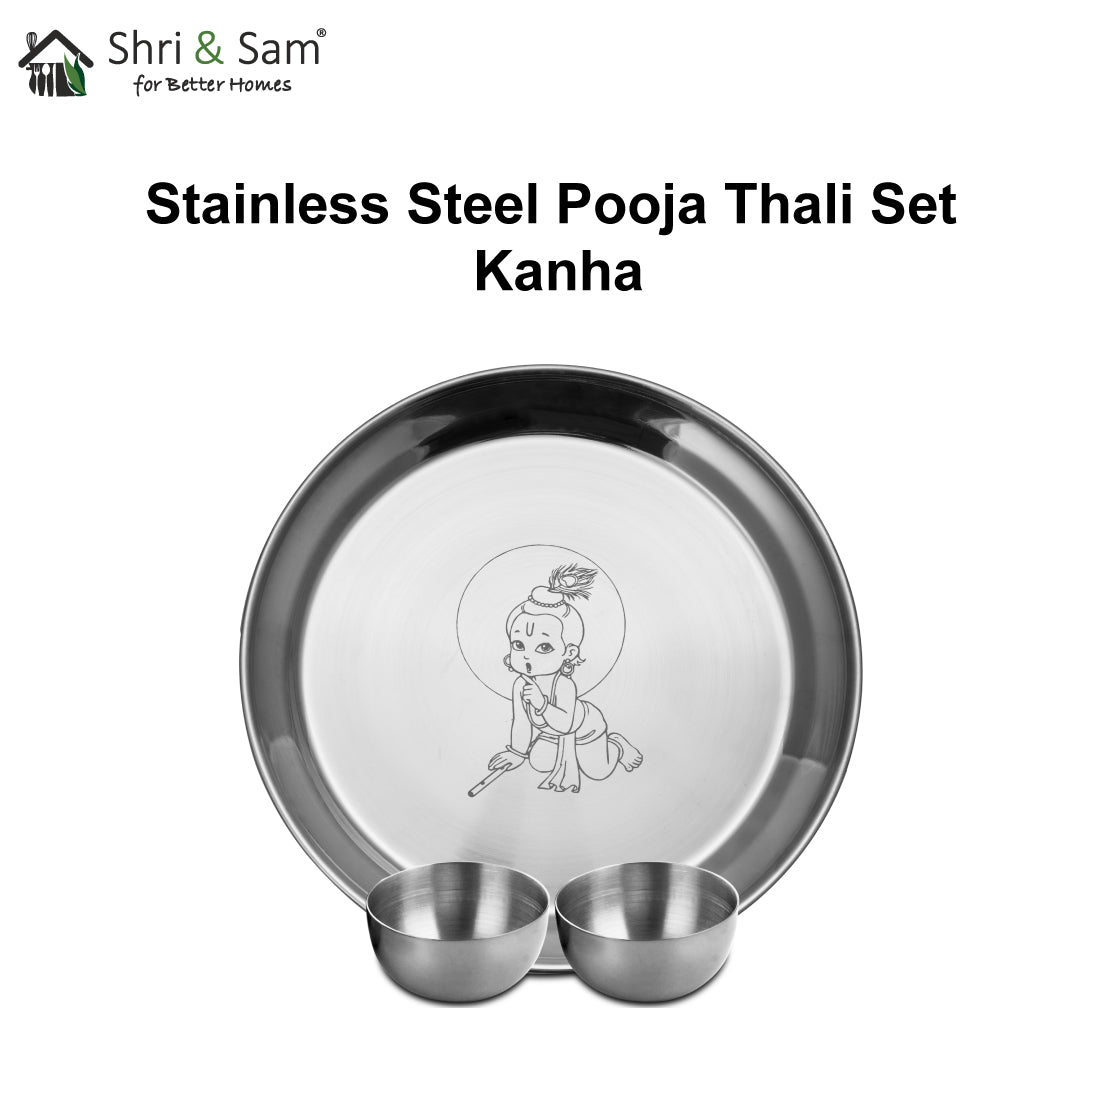 Stainless Steel Pooja Thali Set Kanha